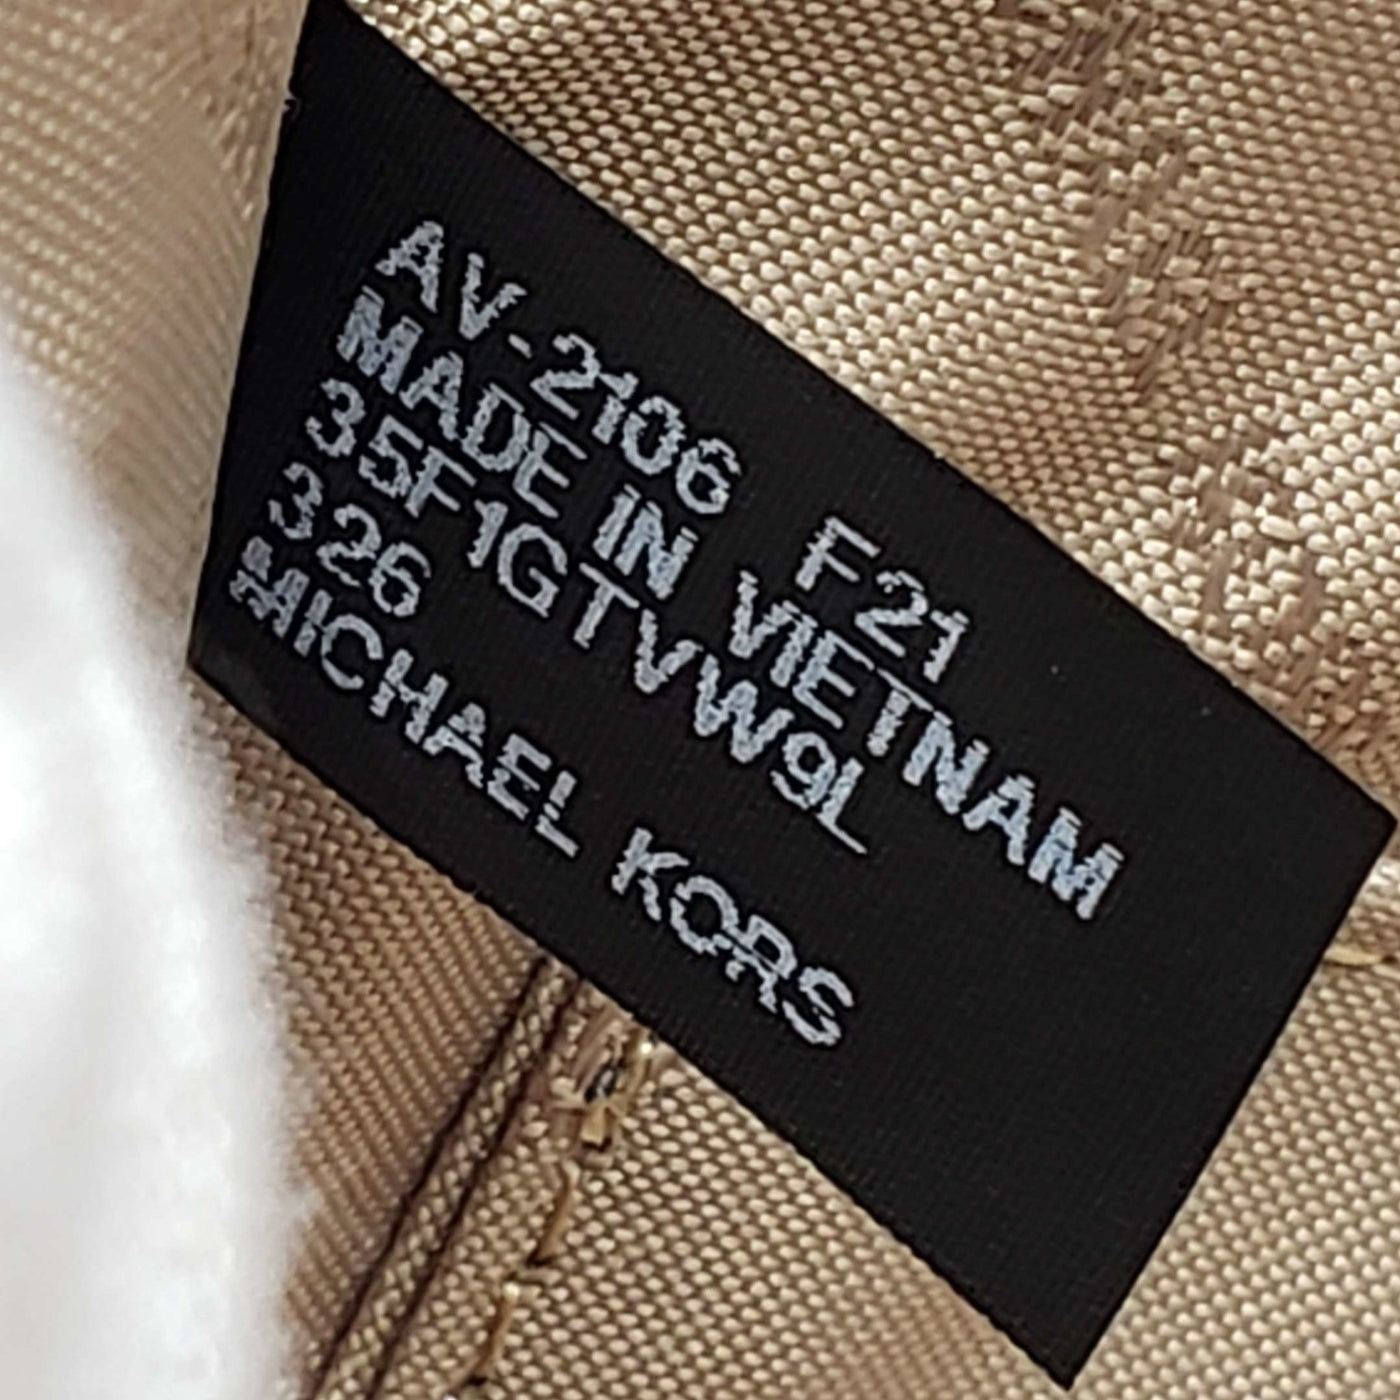 Michael Kors Jet Set Travel Clutch/Wristlet Bag - Luxury Cheaper